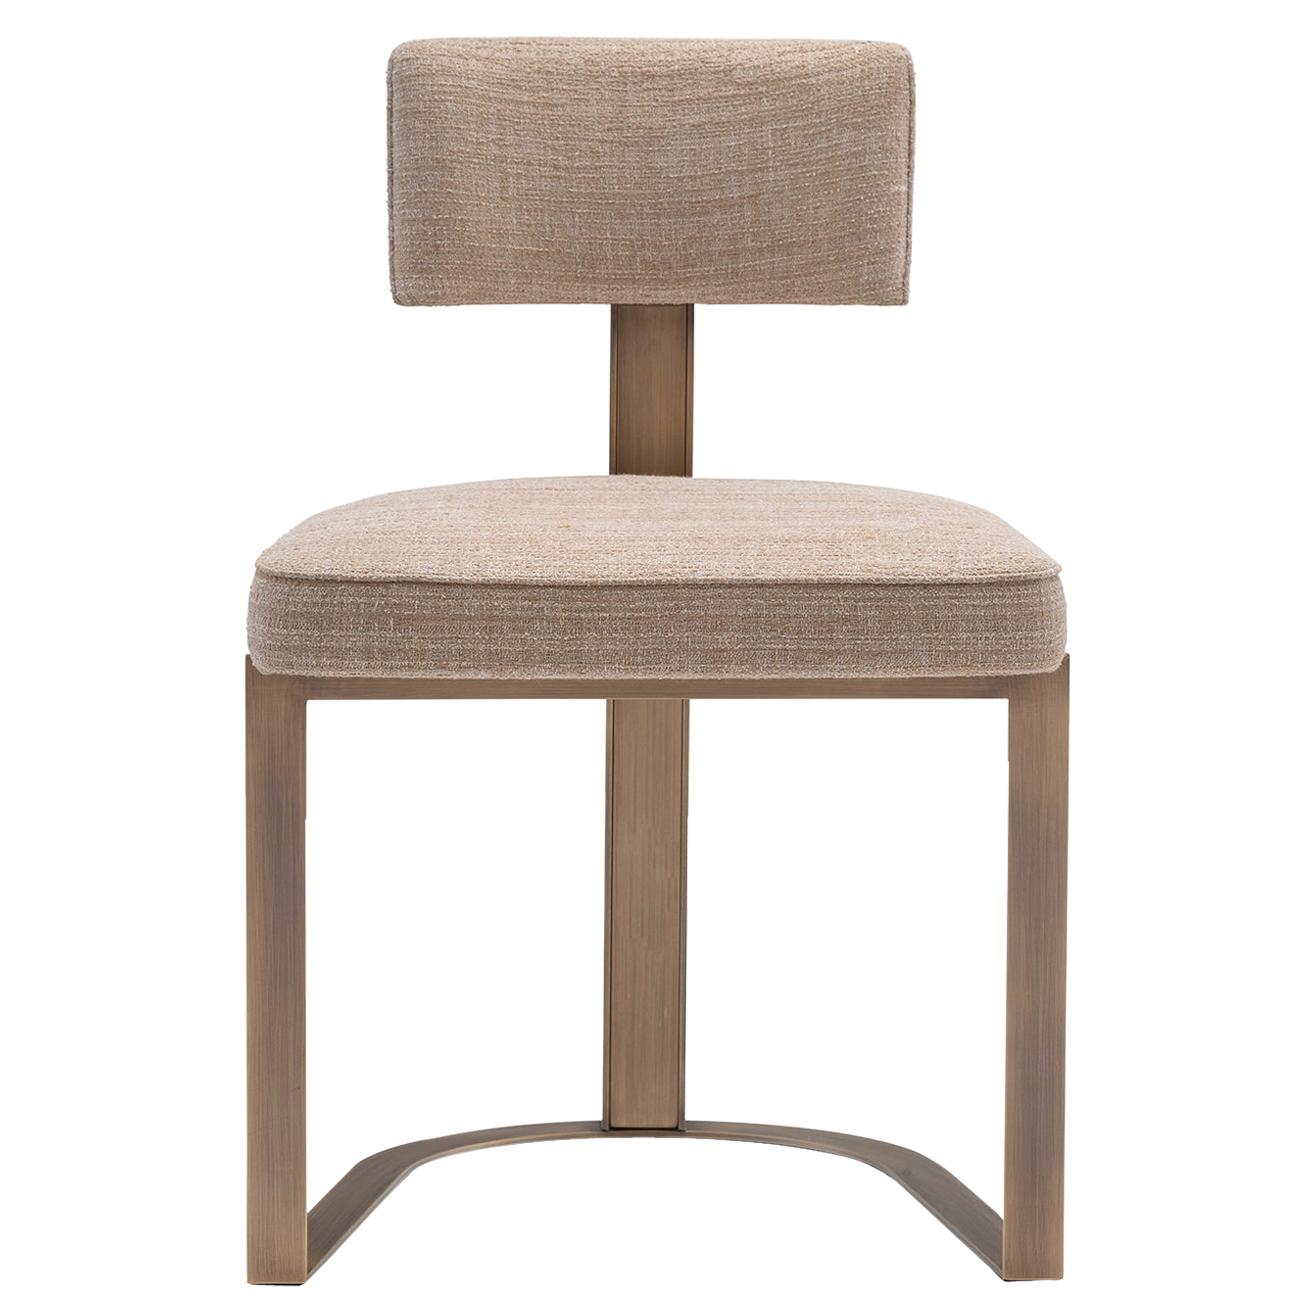 Sveva-Stuhl aus Corno Italiano mit glänzender Oberfläche und brüniertem Metall, Mod. 6042B